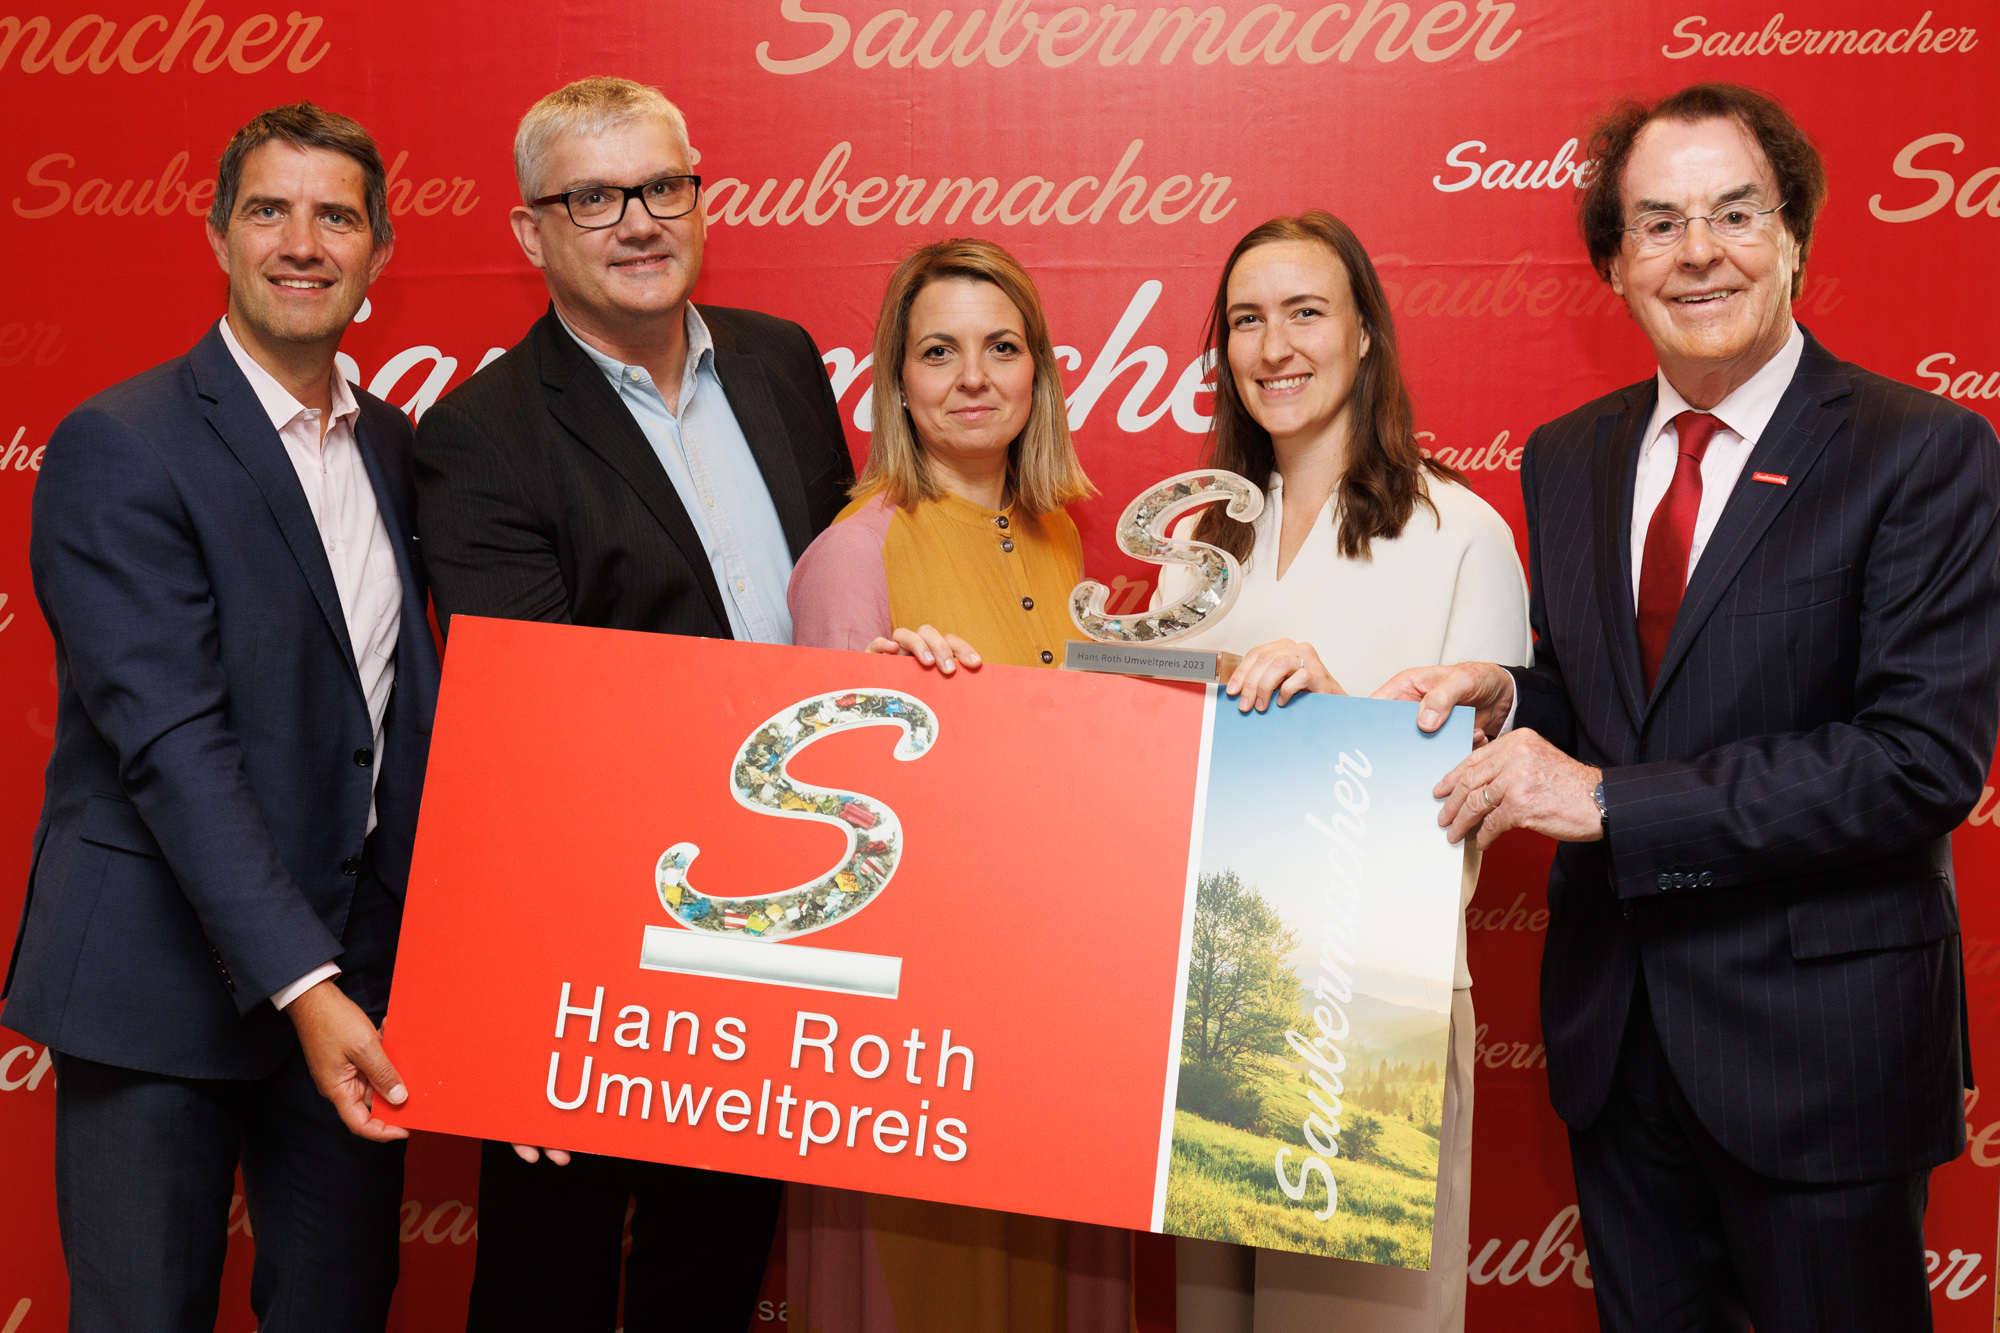 5 people holding the award ©Erwin Scheriau/ Saubermacher